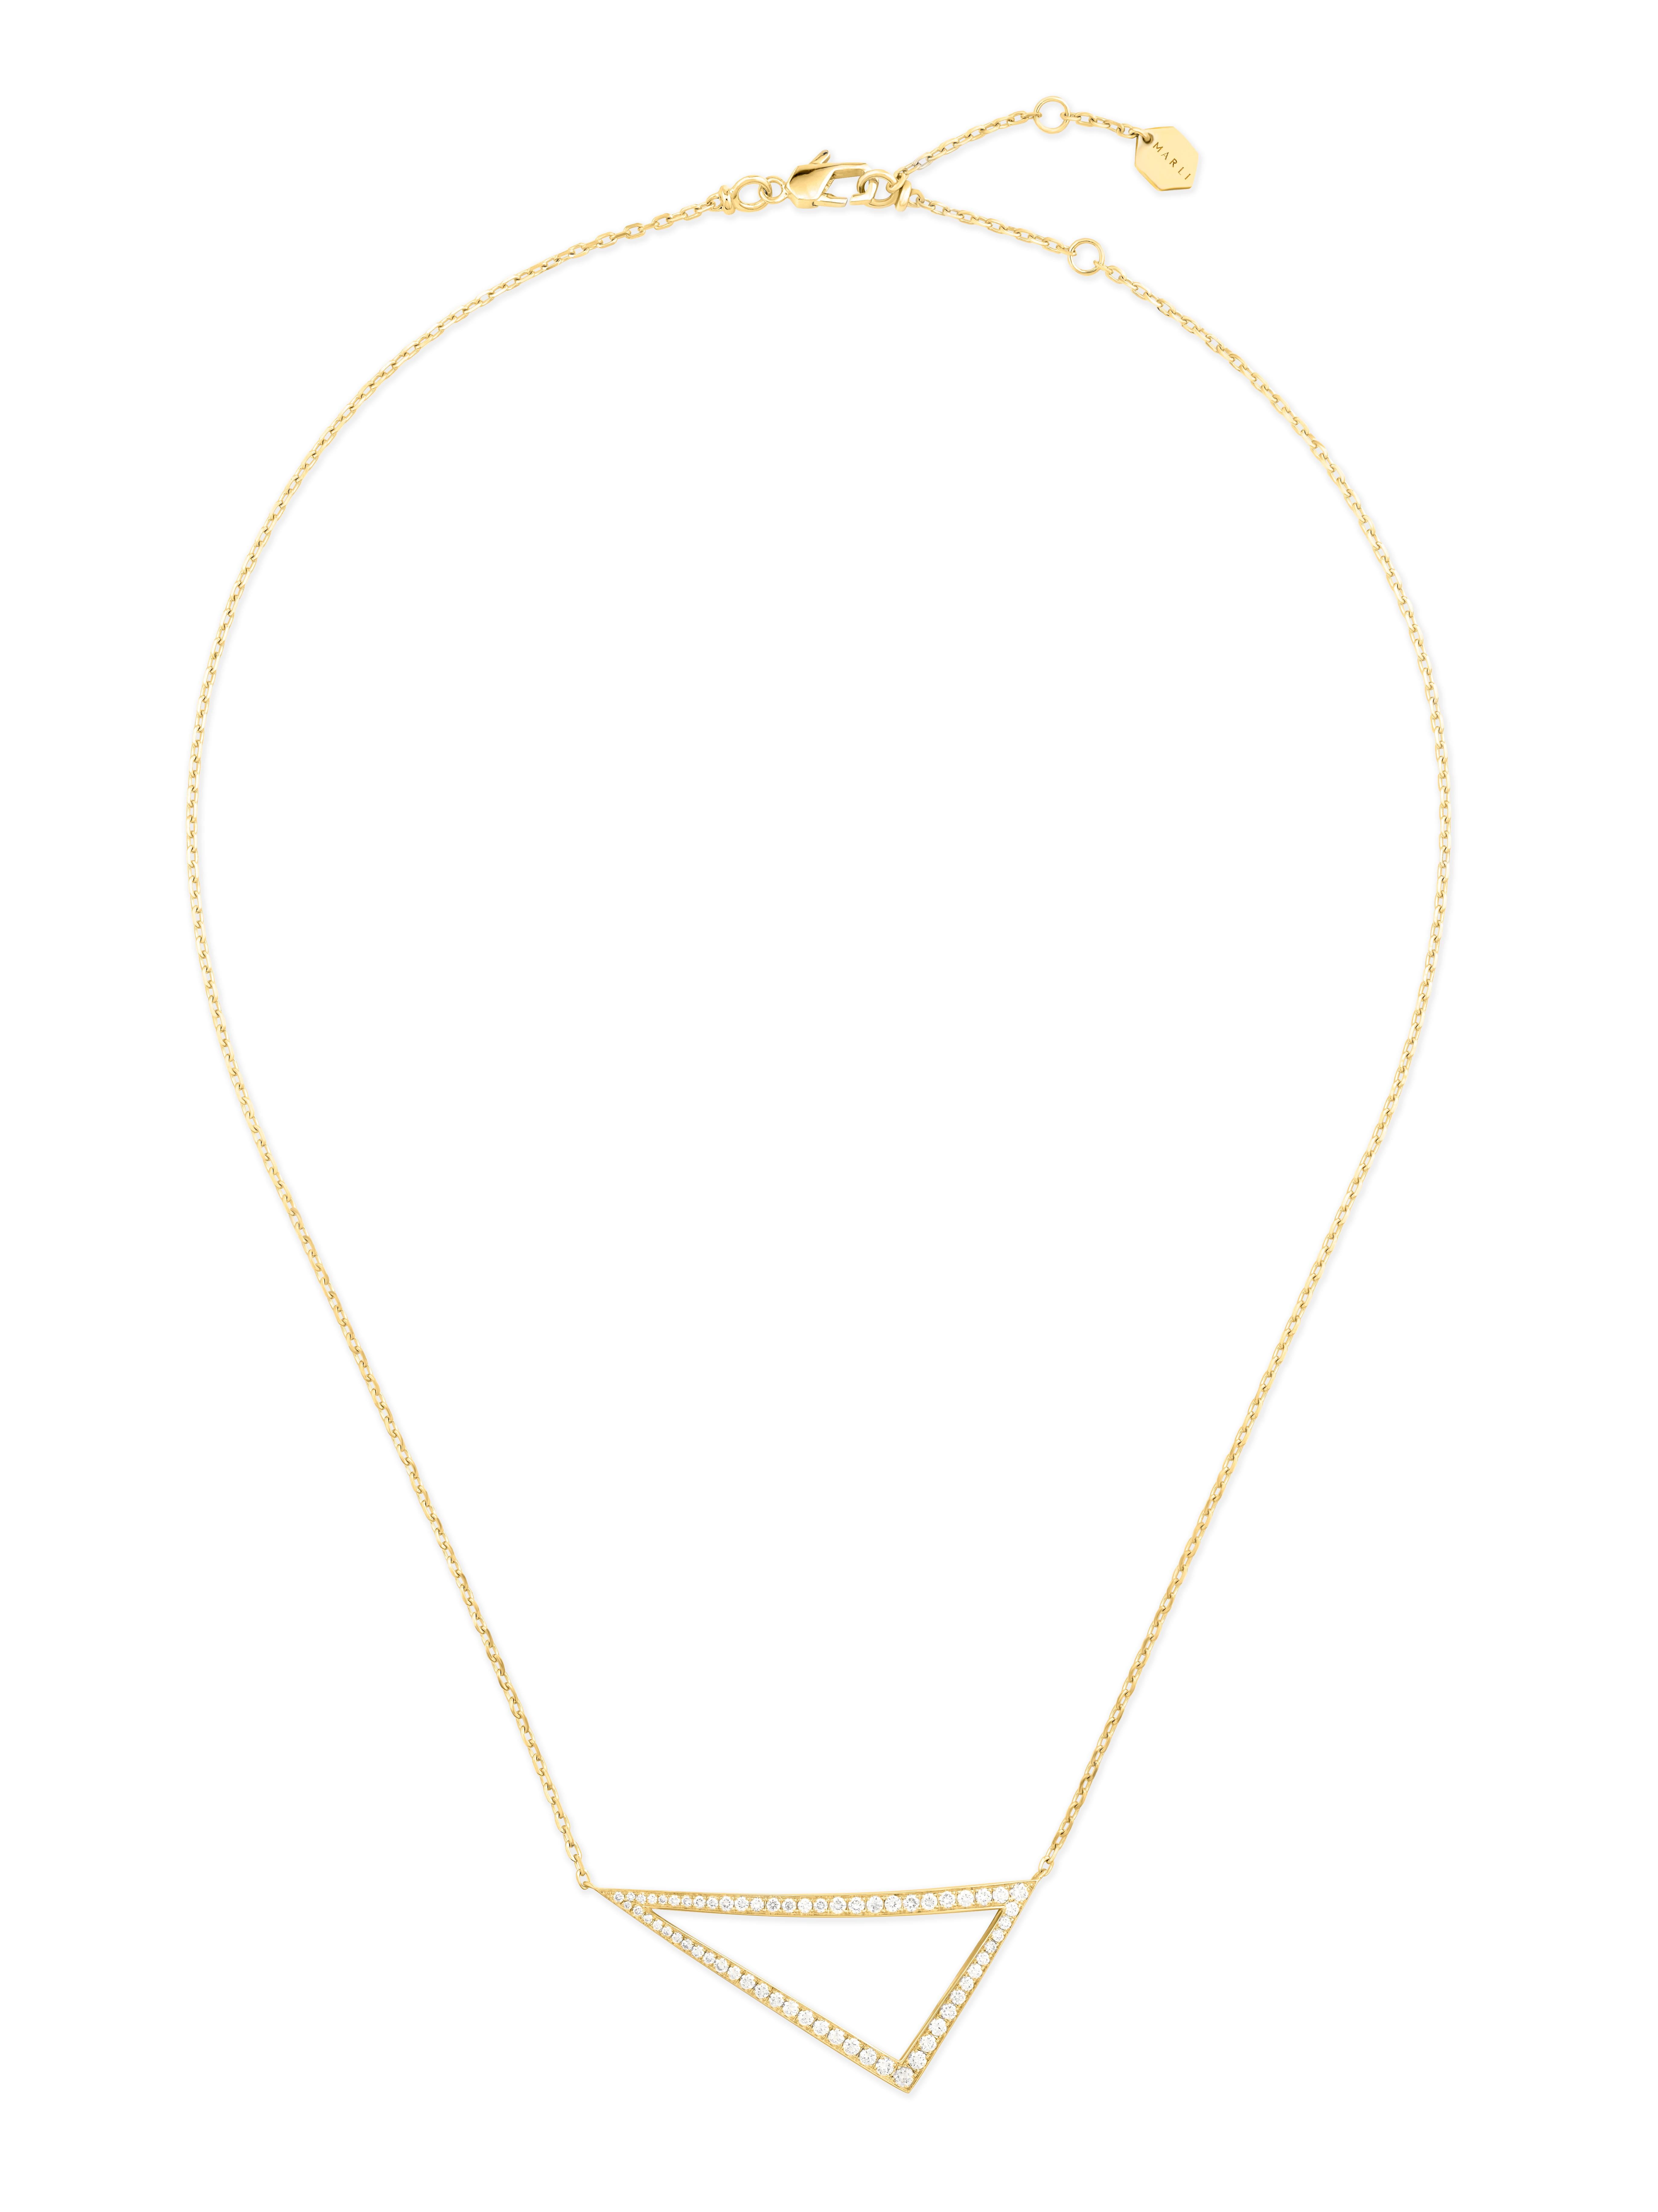 Contemporary MARLI New York 18 Karat Gold Dahlia Chain Necklace For Sale